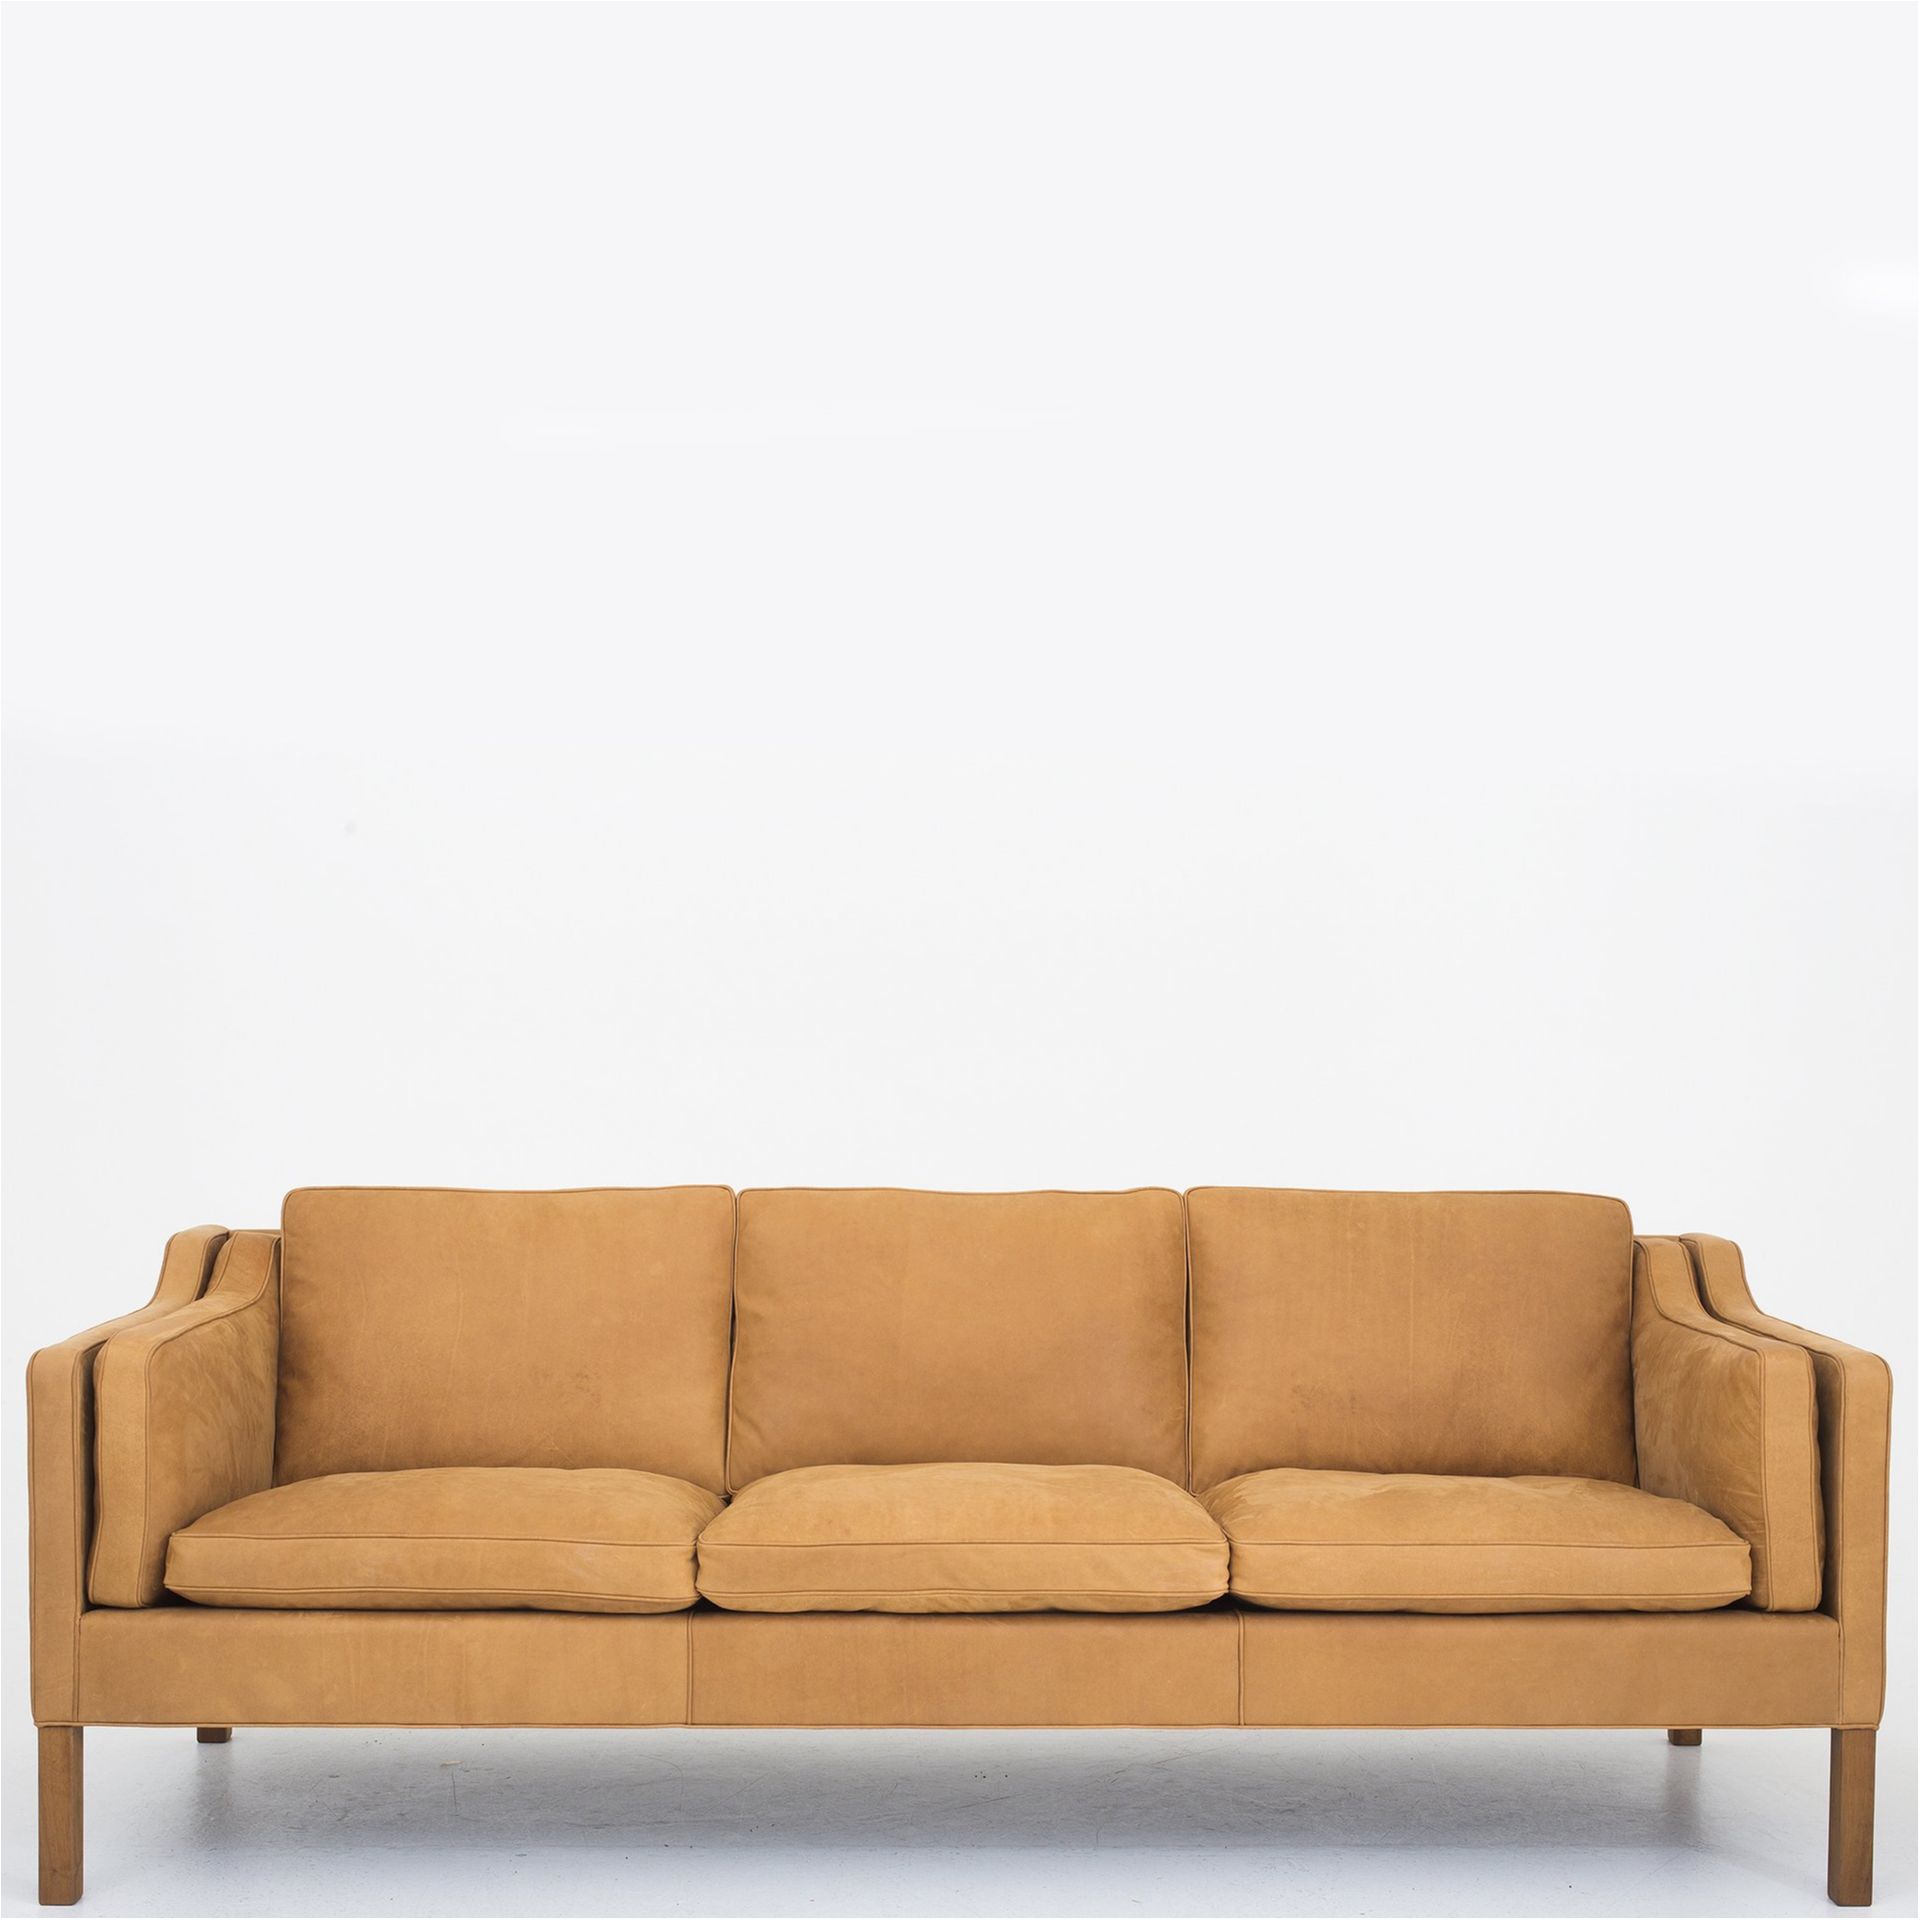 BM 2213 - Reupholstered sofa